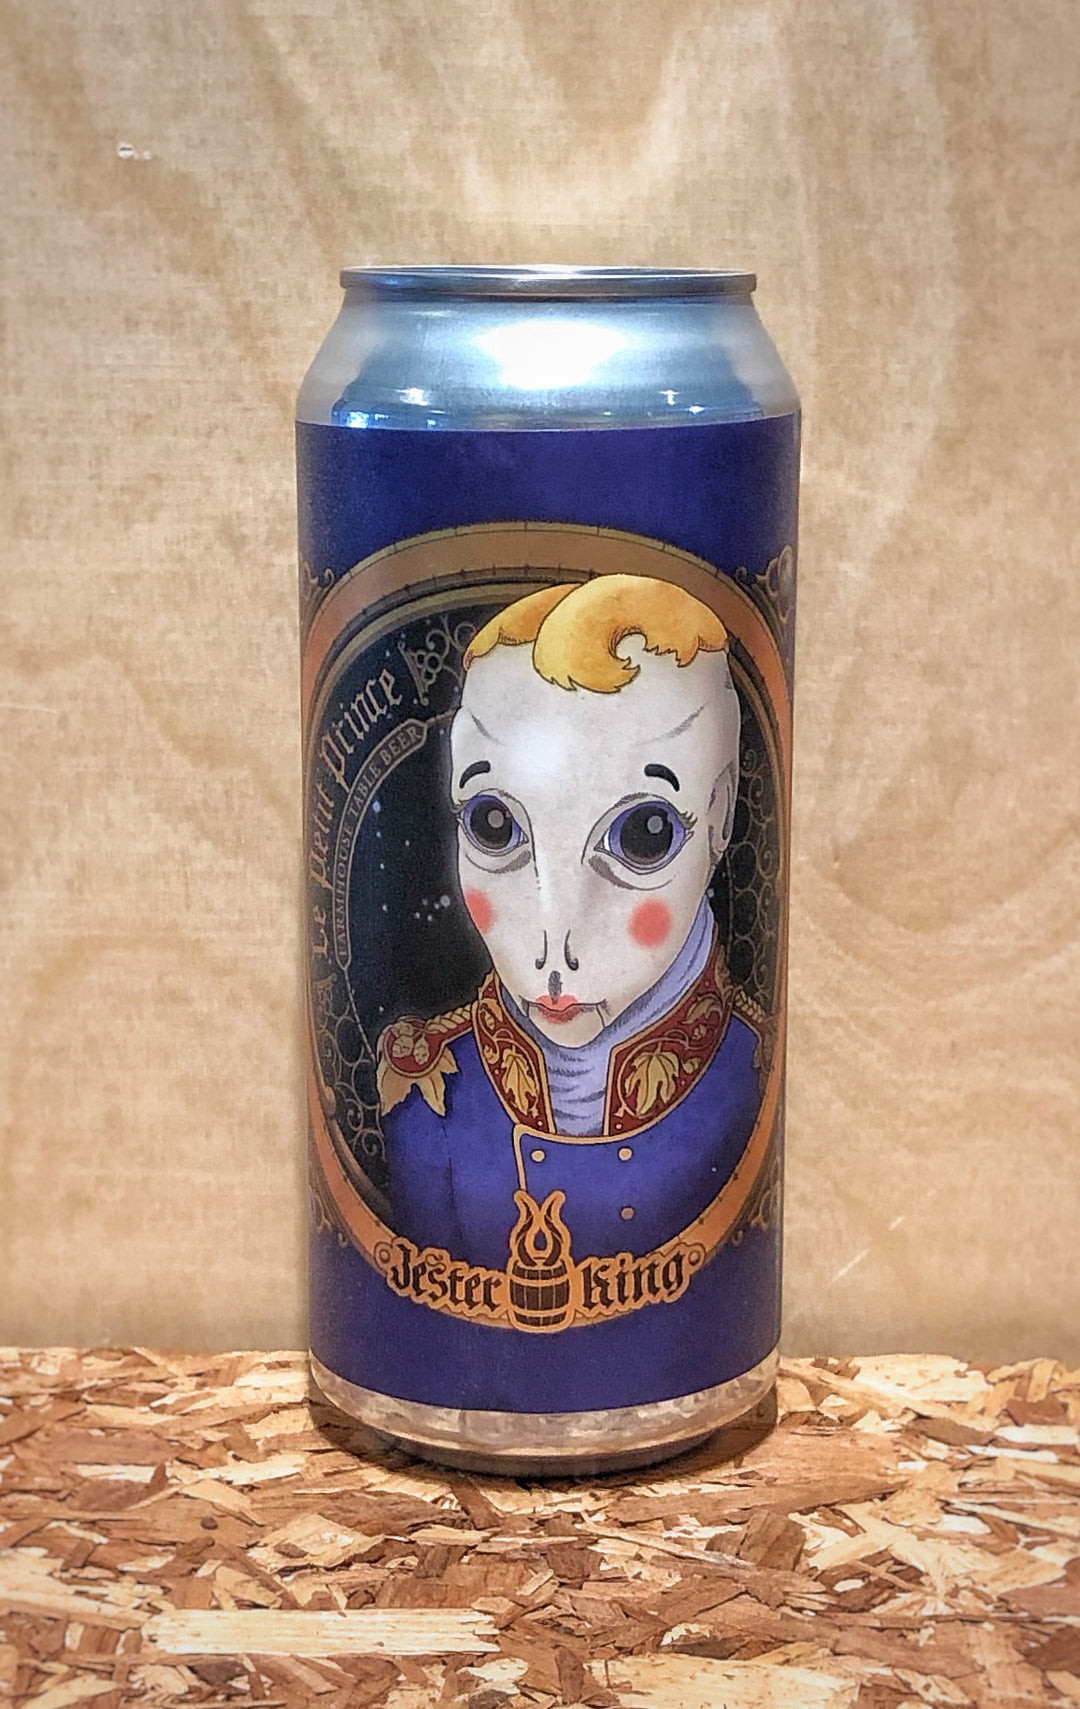 Jester King 'Le Petit Prince' Farmhouse Table Beer (Austin, TX)